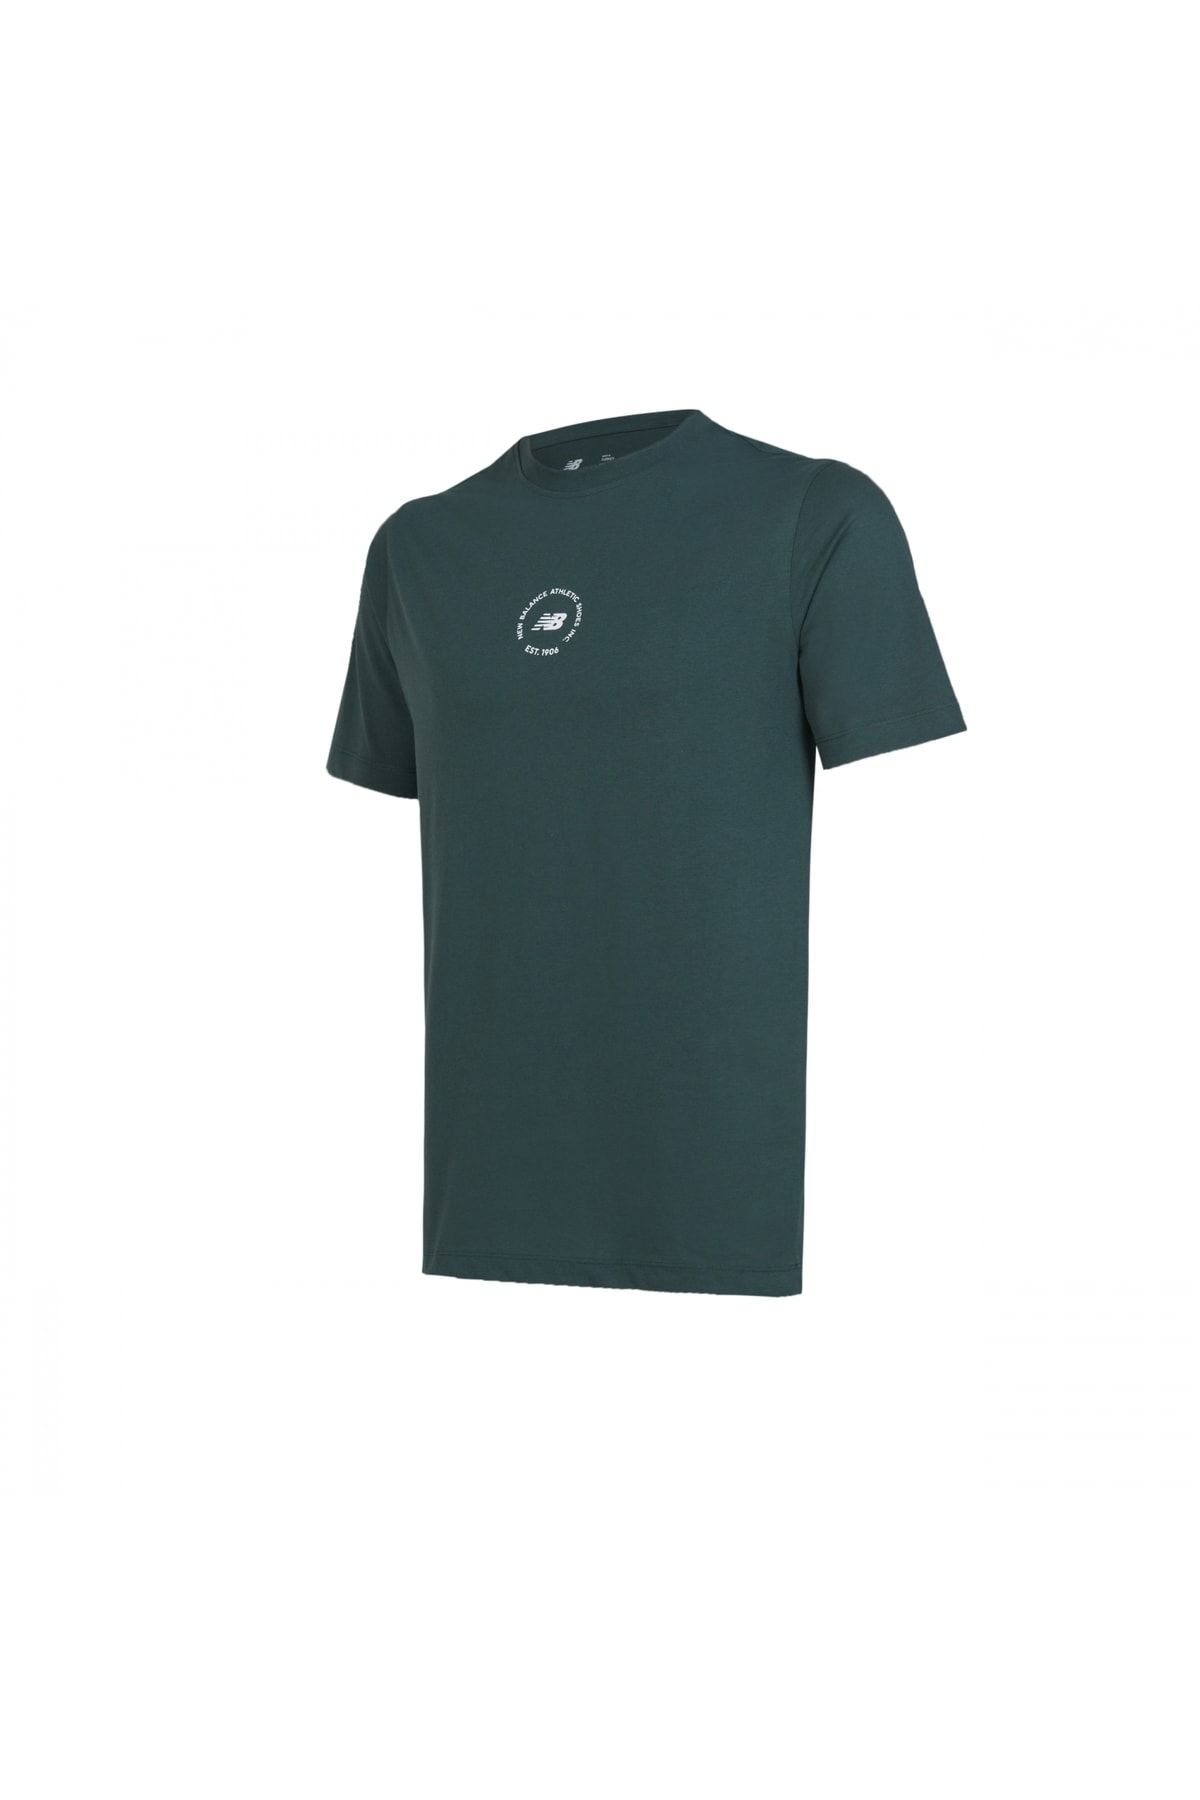 New Balance Lifestyle Yeşil Unisex Tişört Unt1311-pne